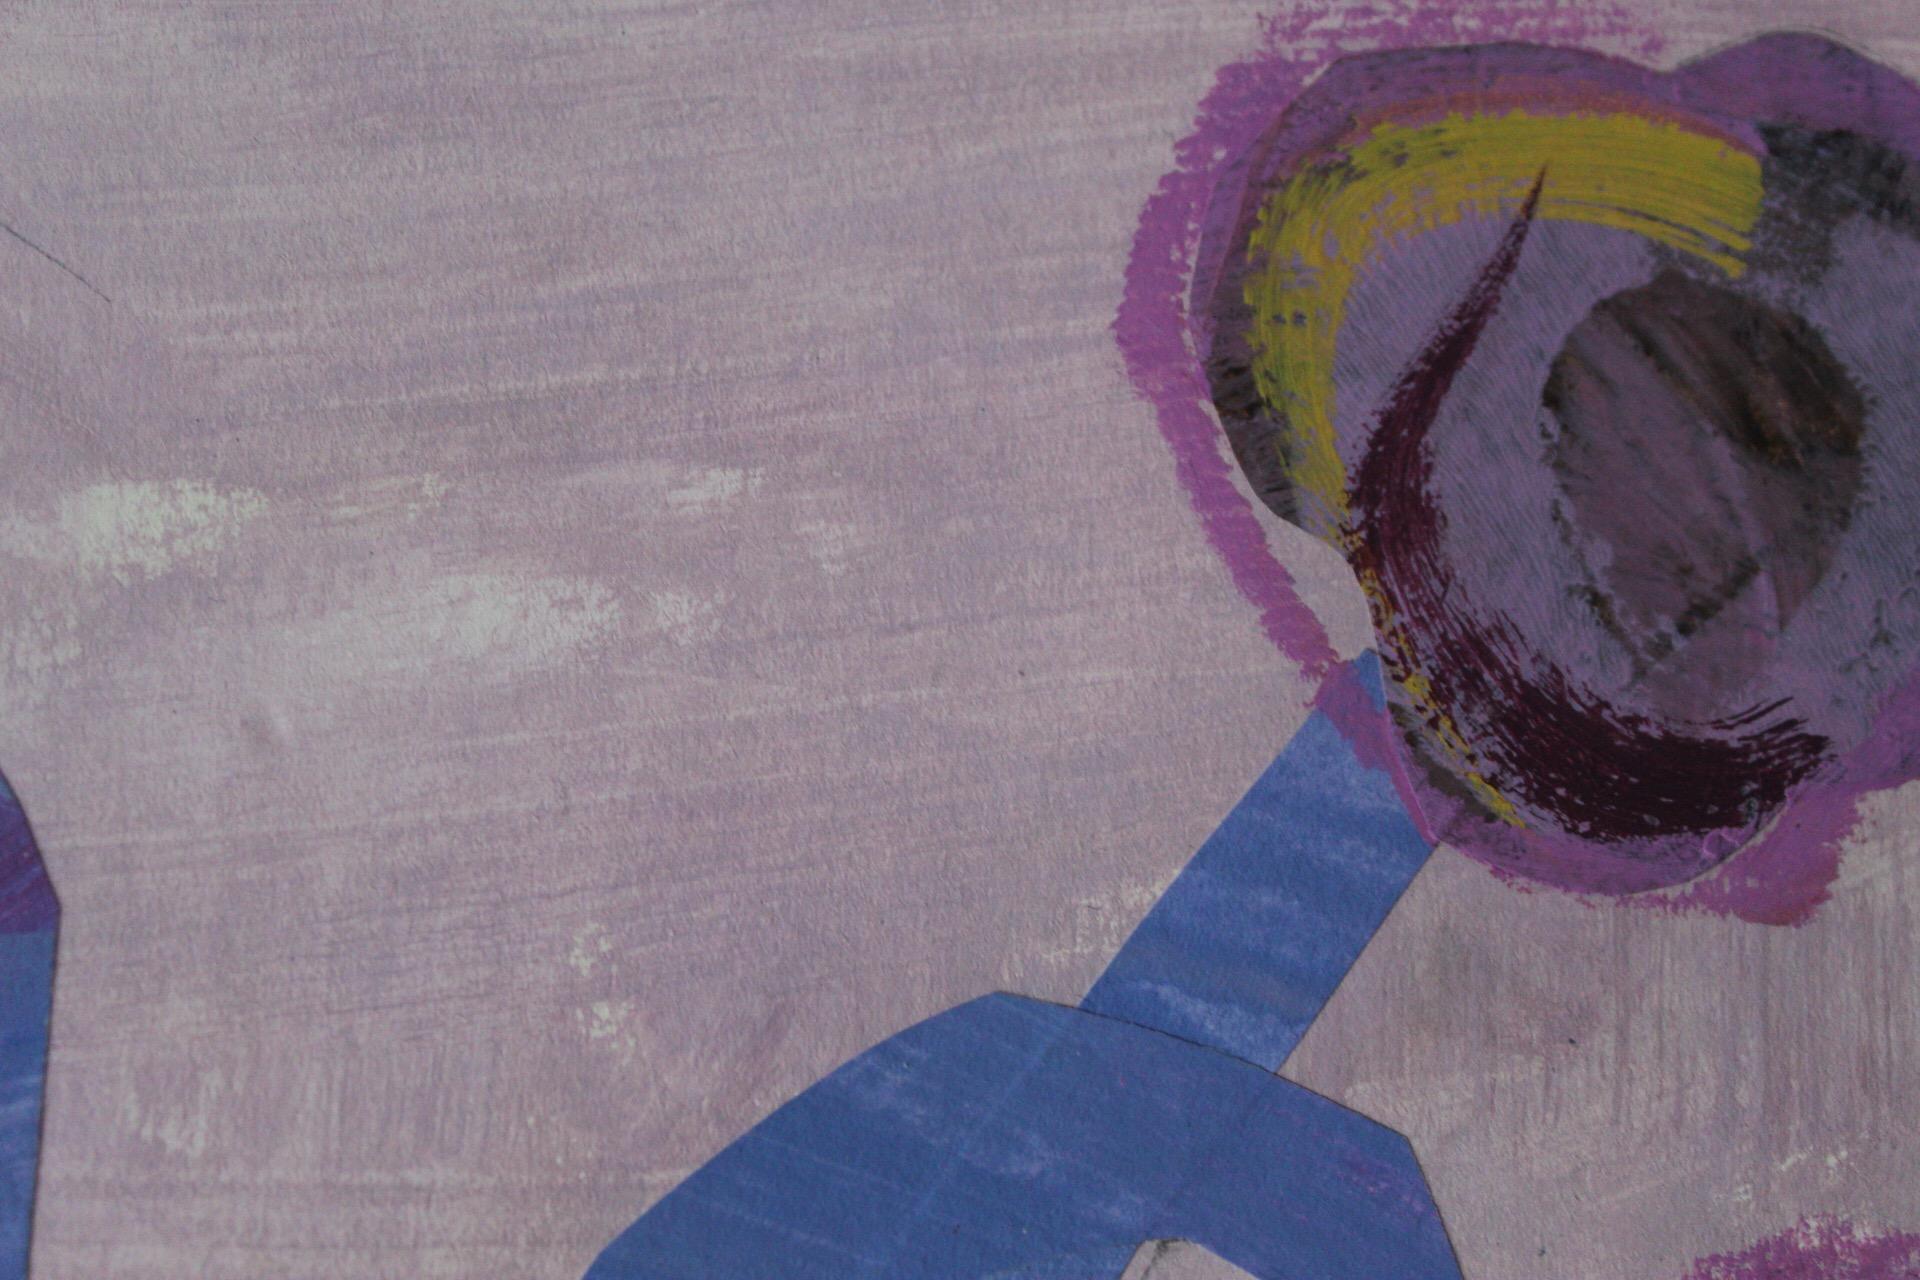 Jenny Balmer
Patterned Vase with Purple Flowers
Original Acrylic Collage
Acrylic Paint on Paper
Image size:H 29cm x W 39cm x D 0.03cm
Mount Size:H 40.5cm x W 50cm x D 0.5cm
Sold Unframed

Patterned Vase with Purple Flowers is an original still life